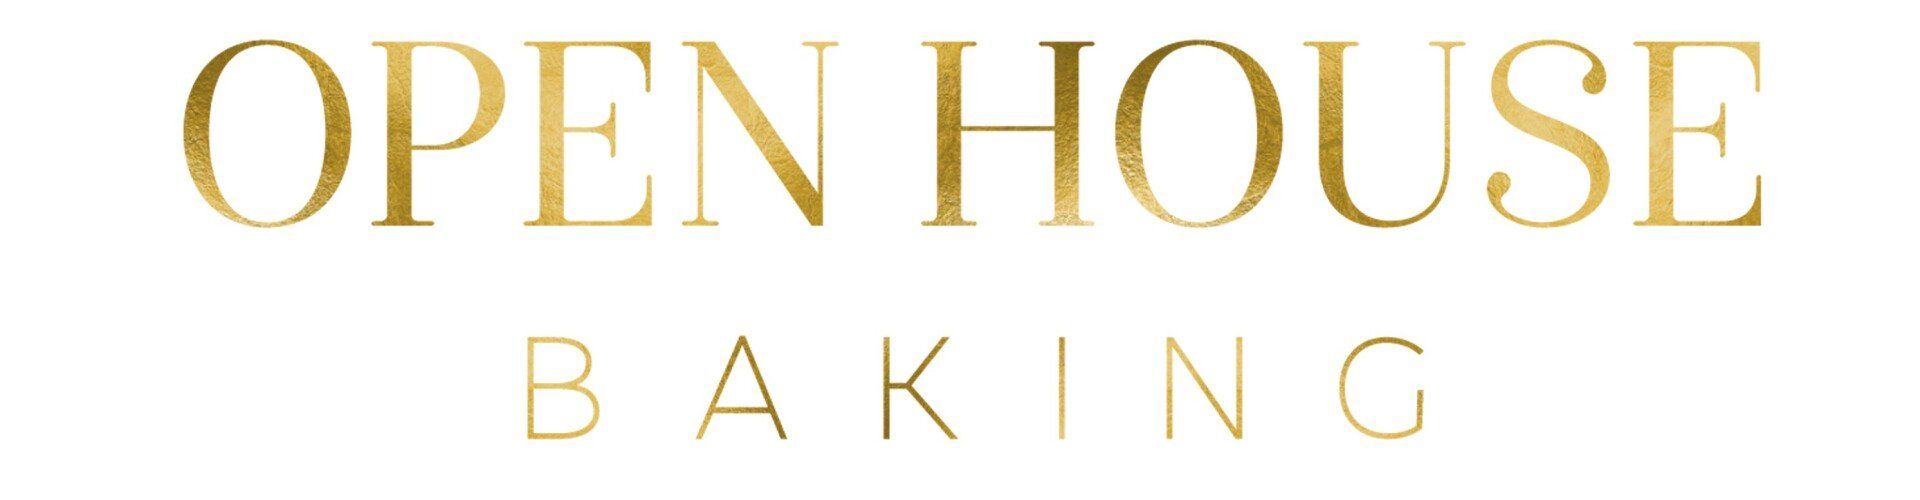 Open House Baking logo